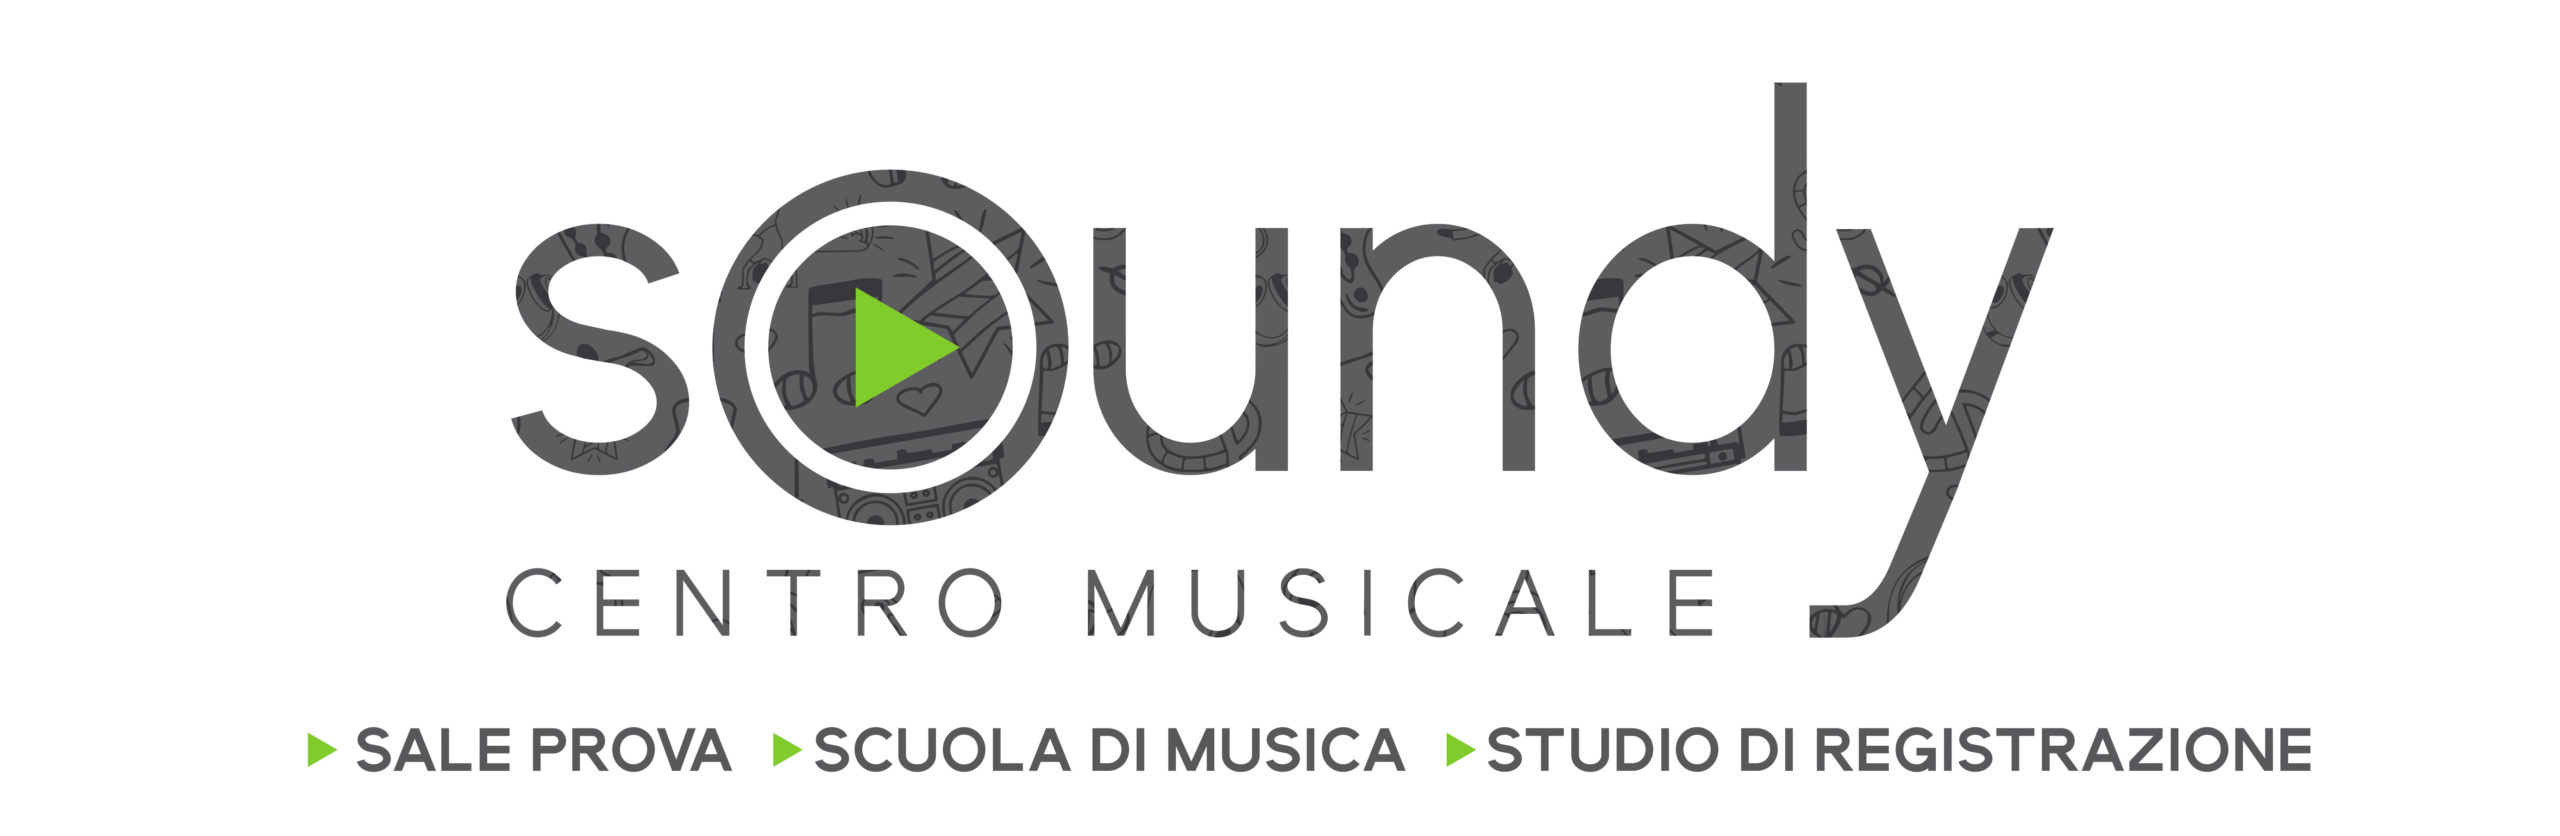 Centro Musicale Soundy